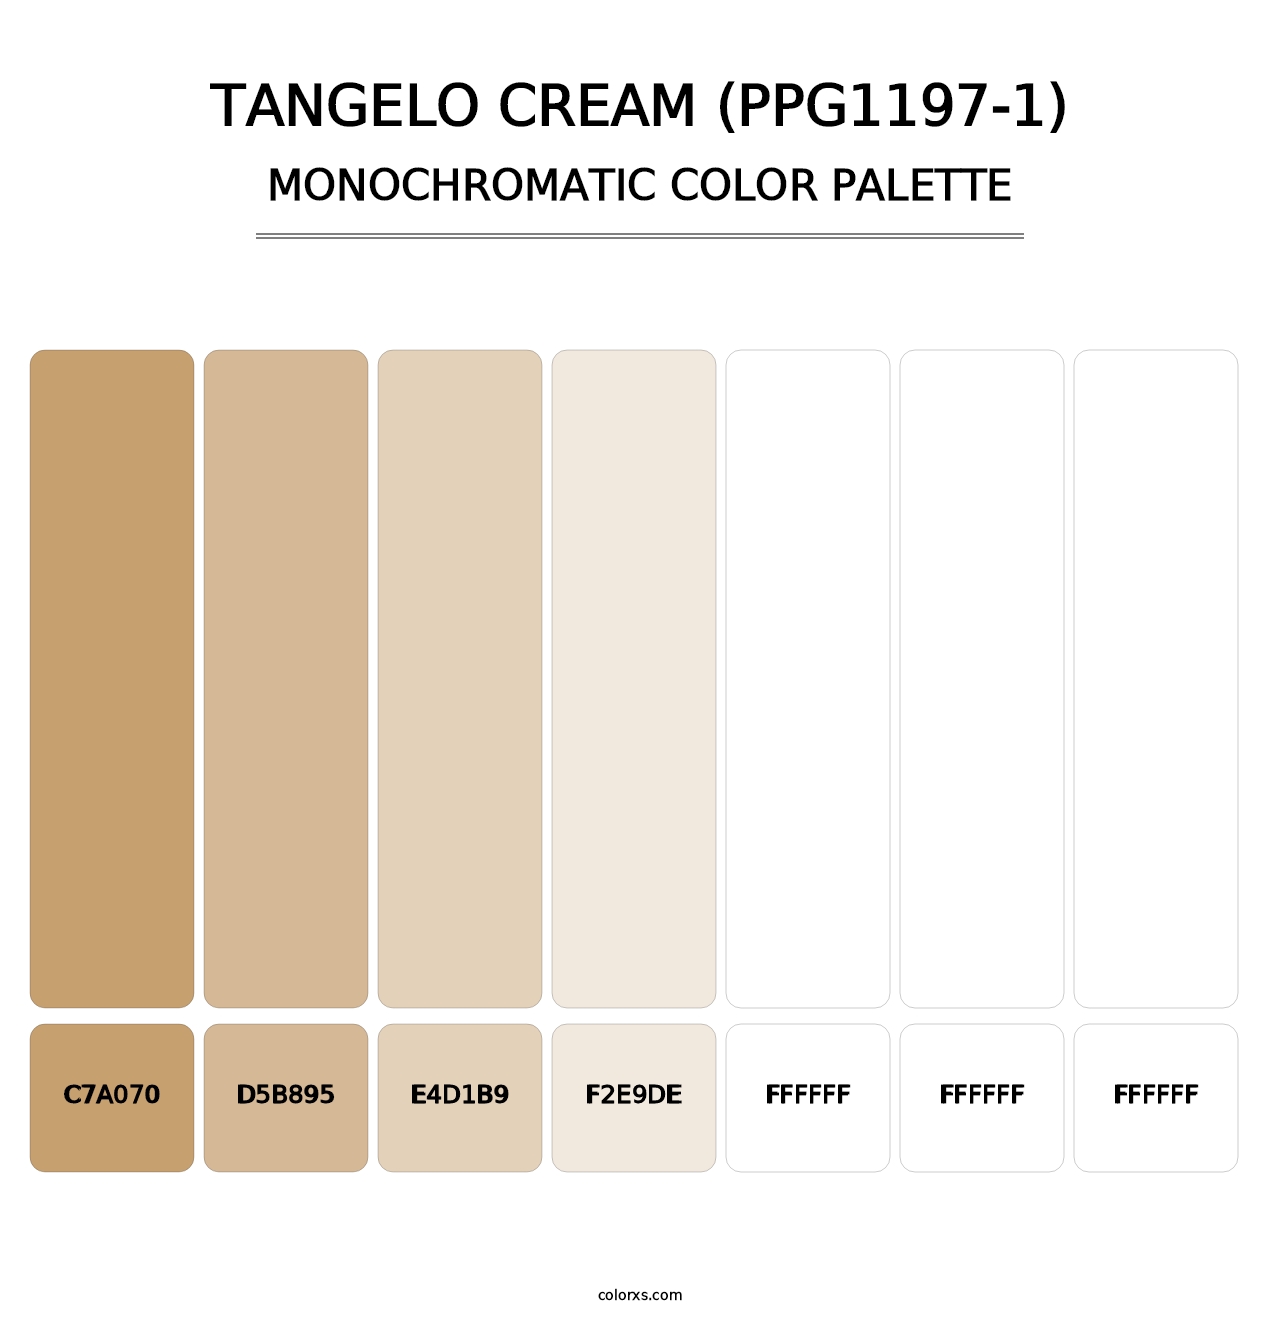 Tangelo Cream (PPG1197-1) - Monochromatic Color Palette